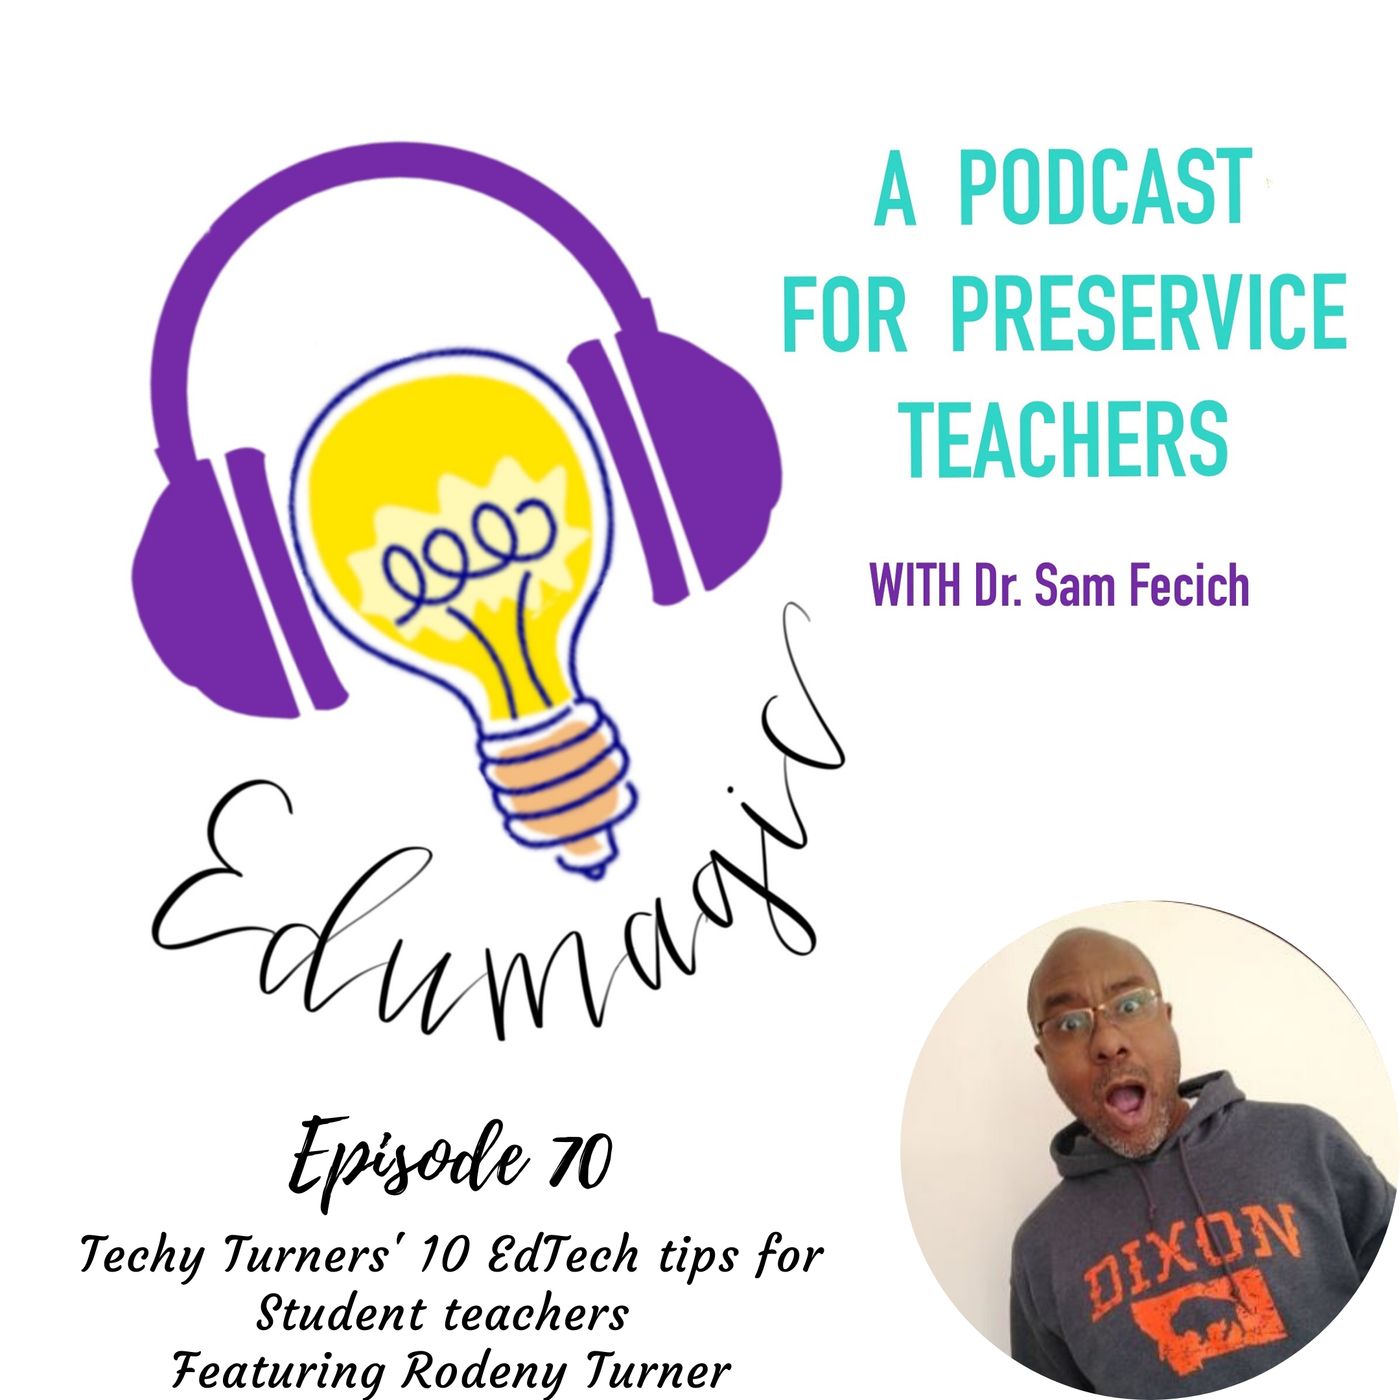 Techy Turners' 10 EdTech tips for Student teachers E70